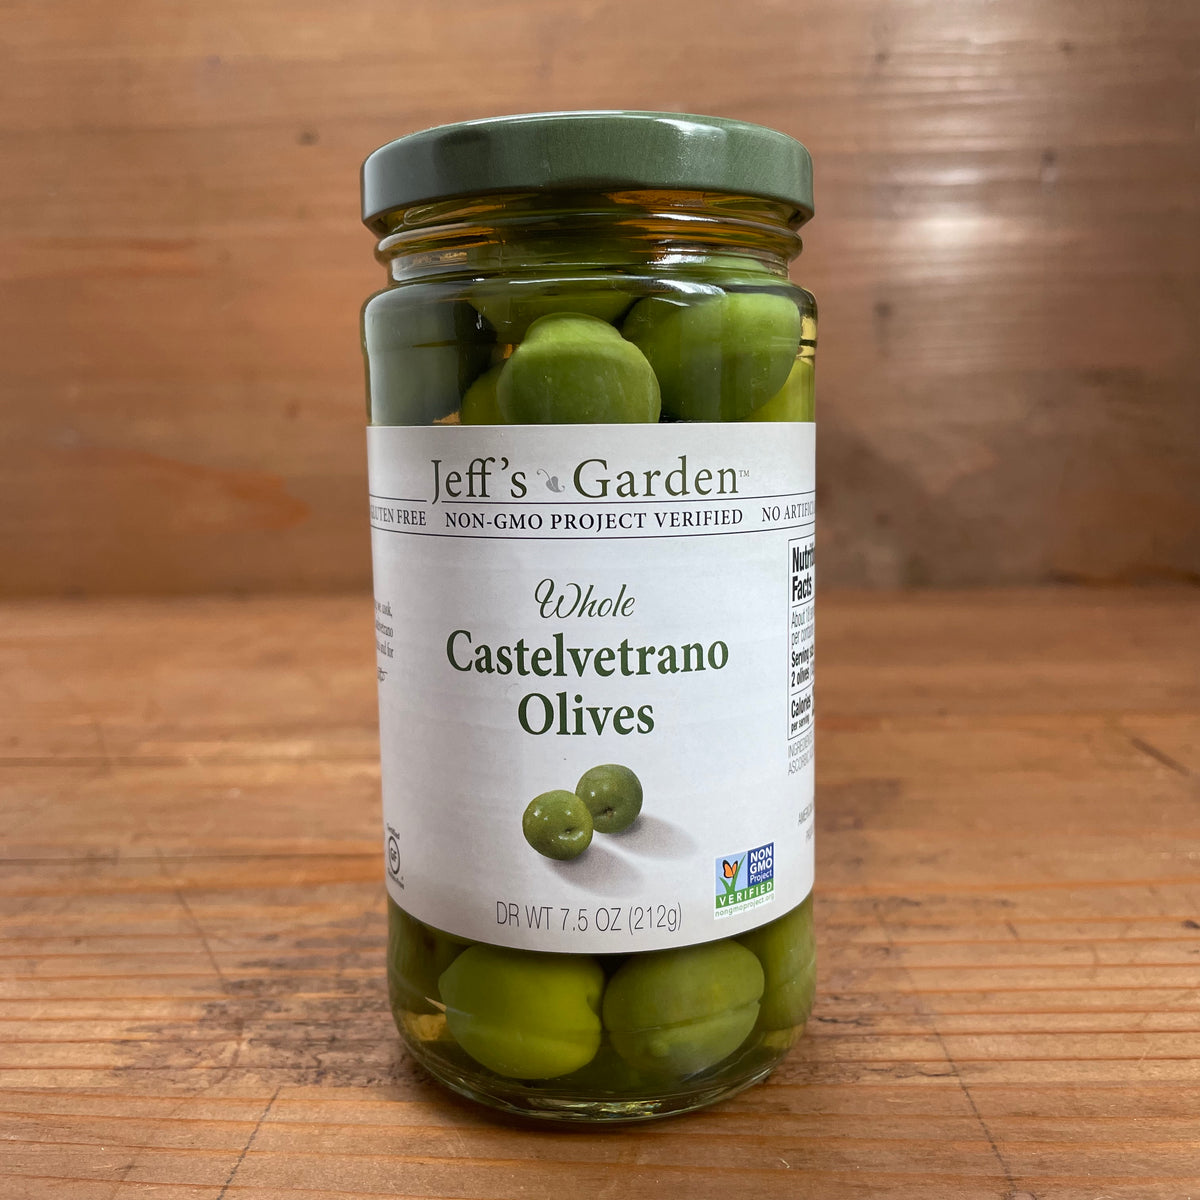 Jeff’s Garden Whole Castelvetrano Olives - 7.5oz